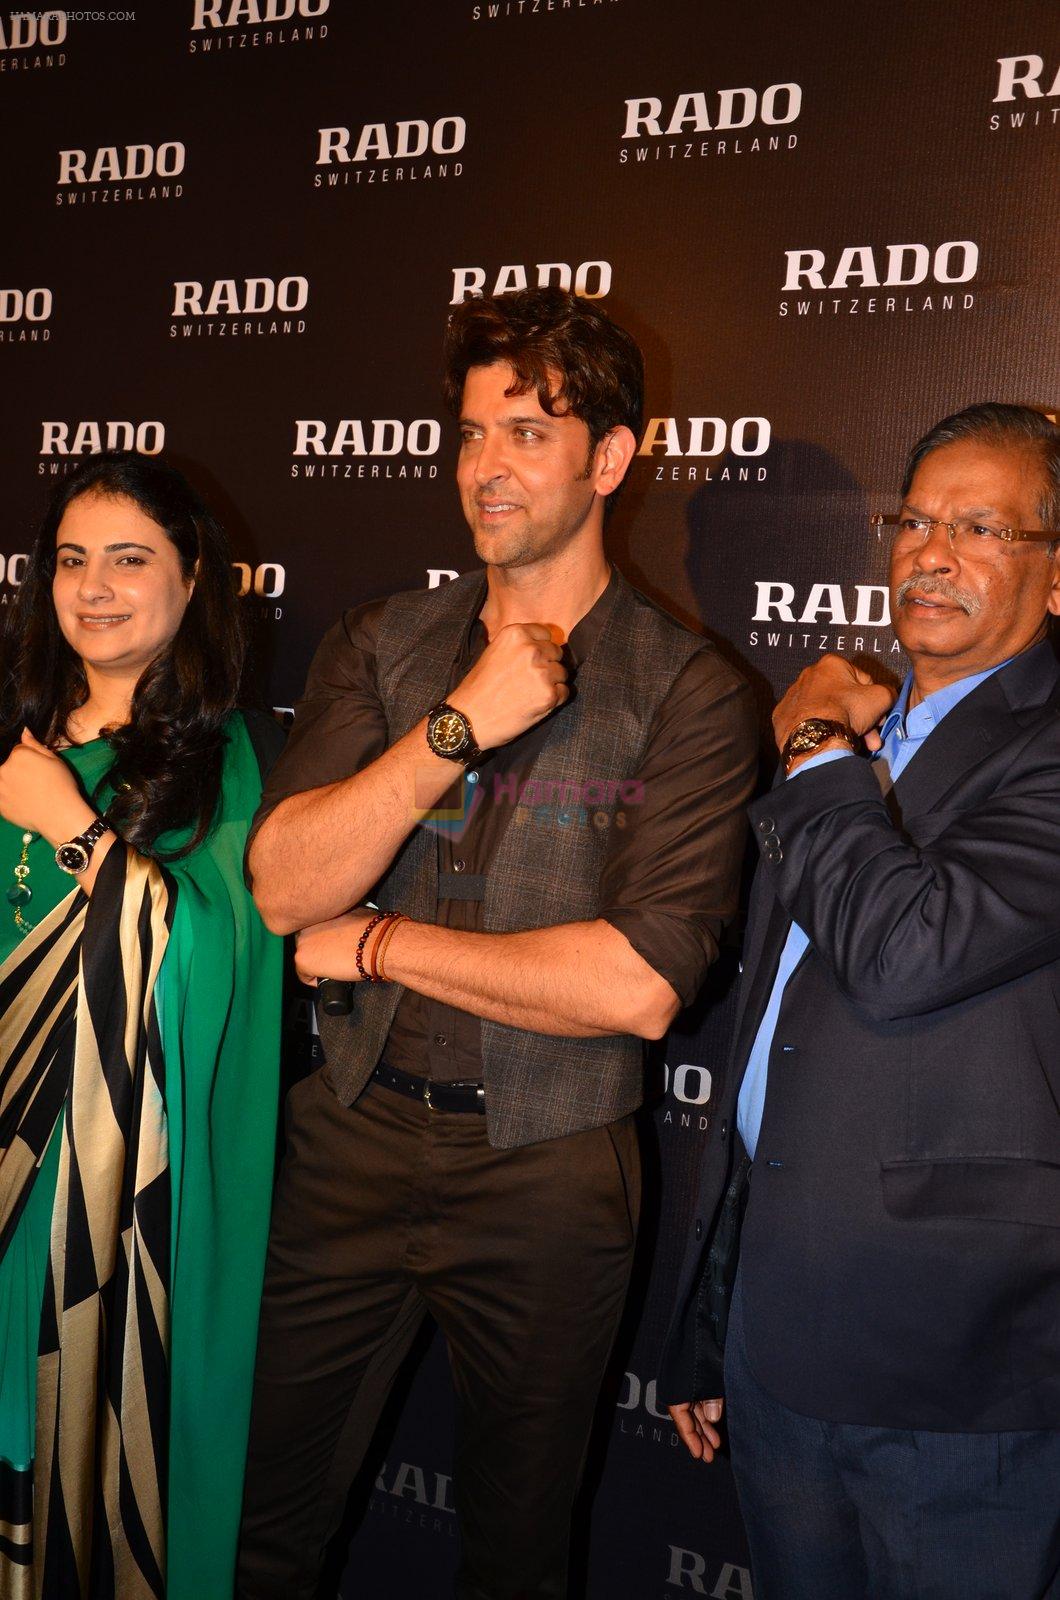 Hrithik Roshan at rado event in Mumbai on 27th May 2016